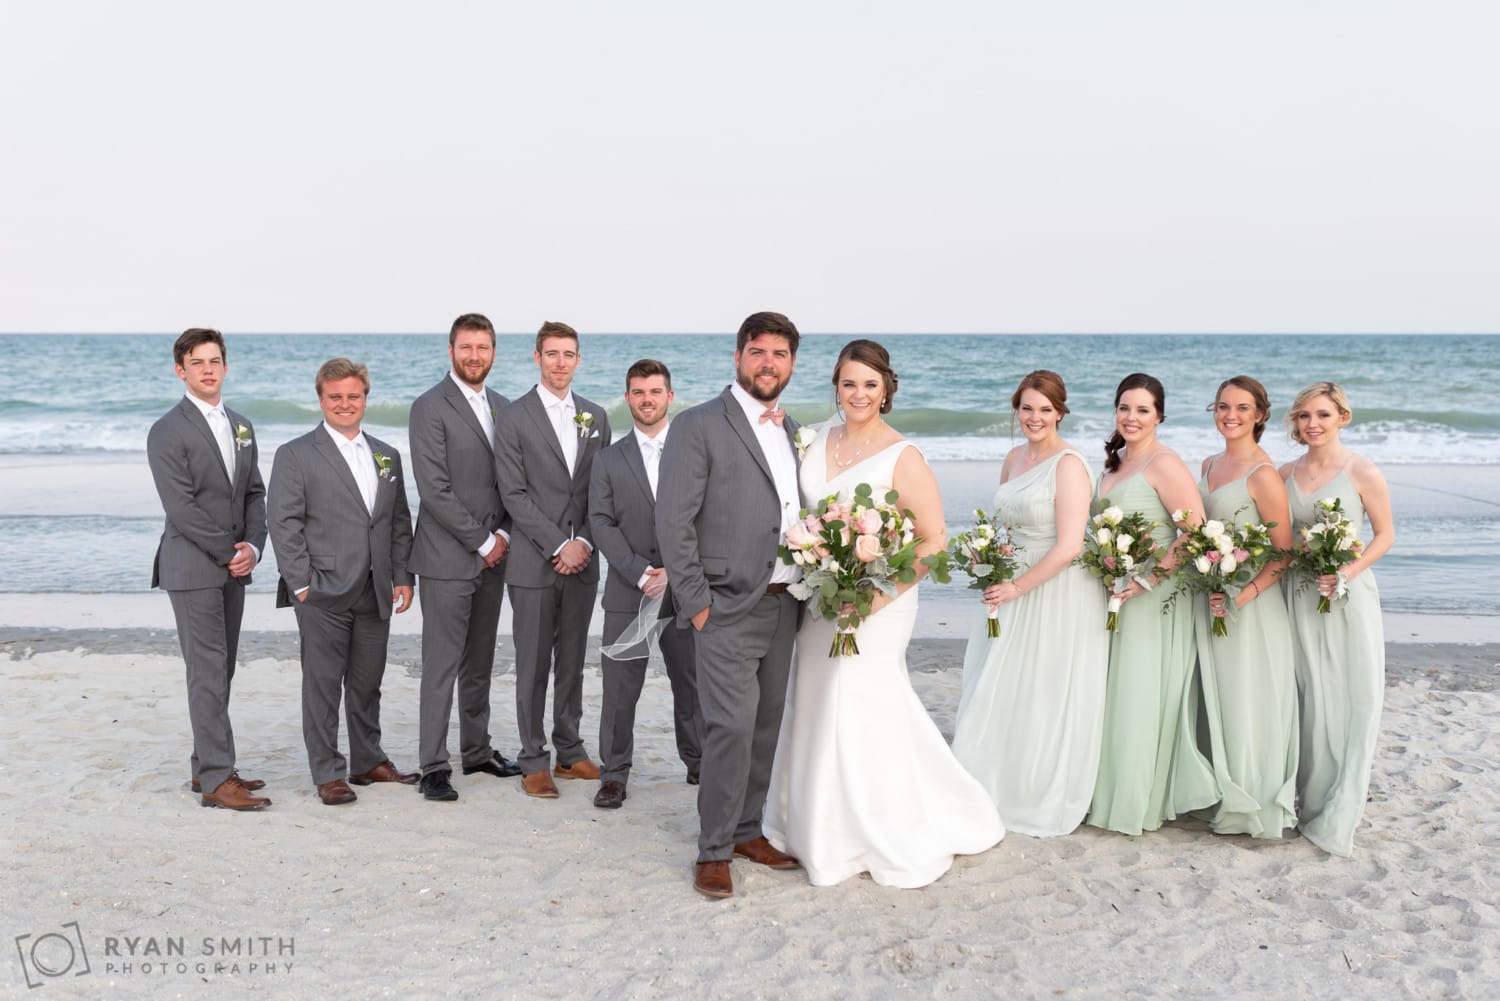 Fun bridal party pictures by the ocean - Grande Dunes Ocean Club - Myrtle Beach